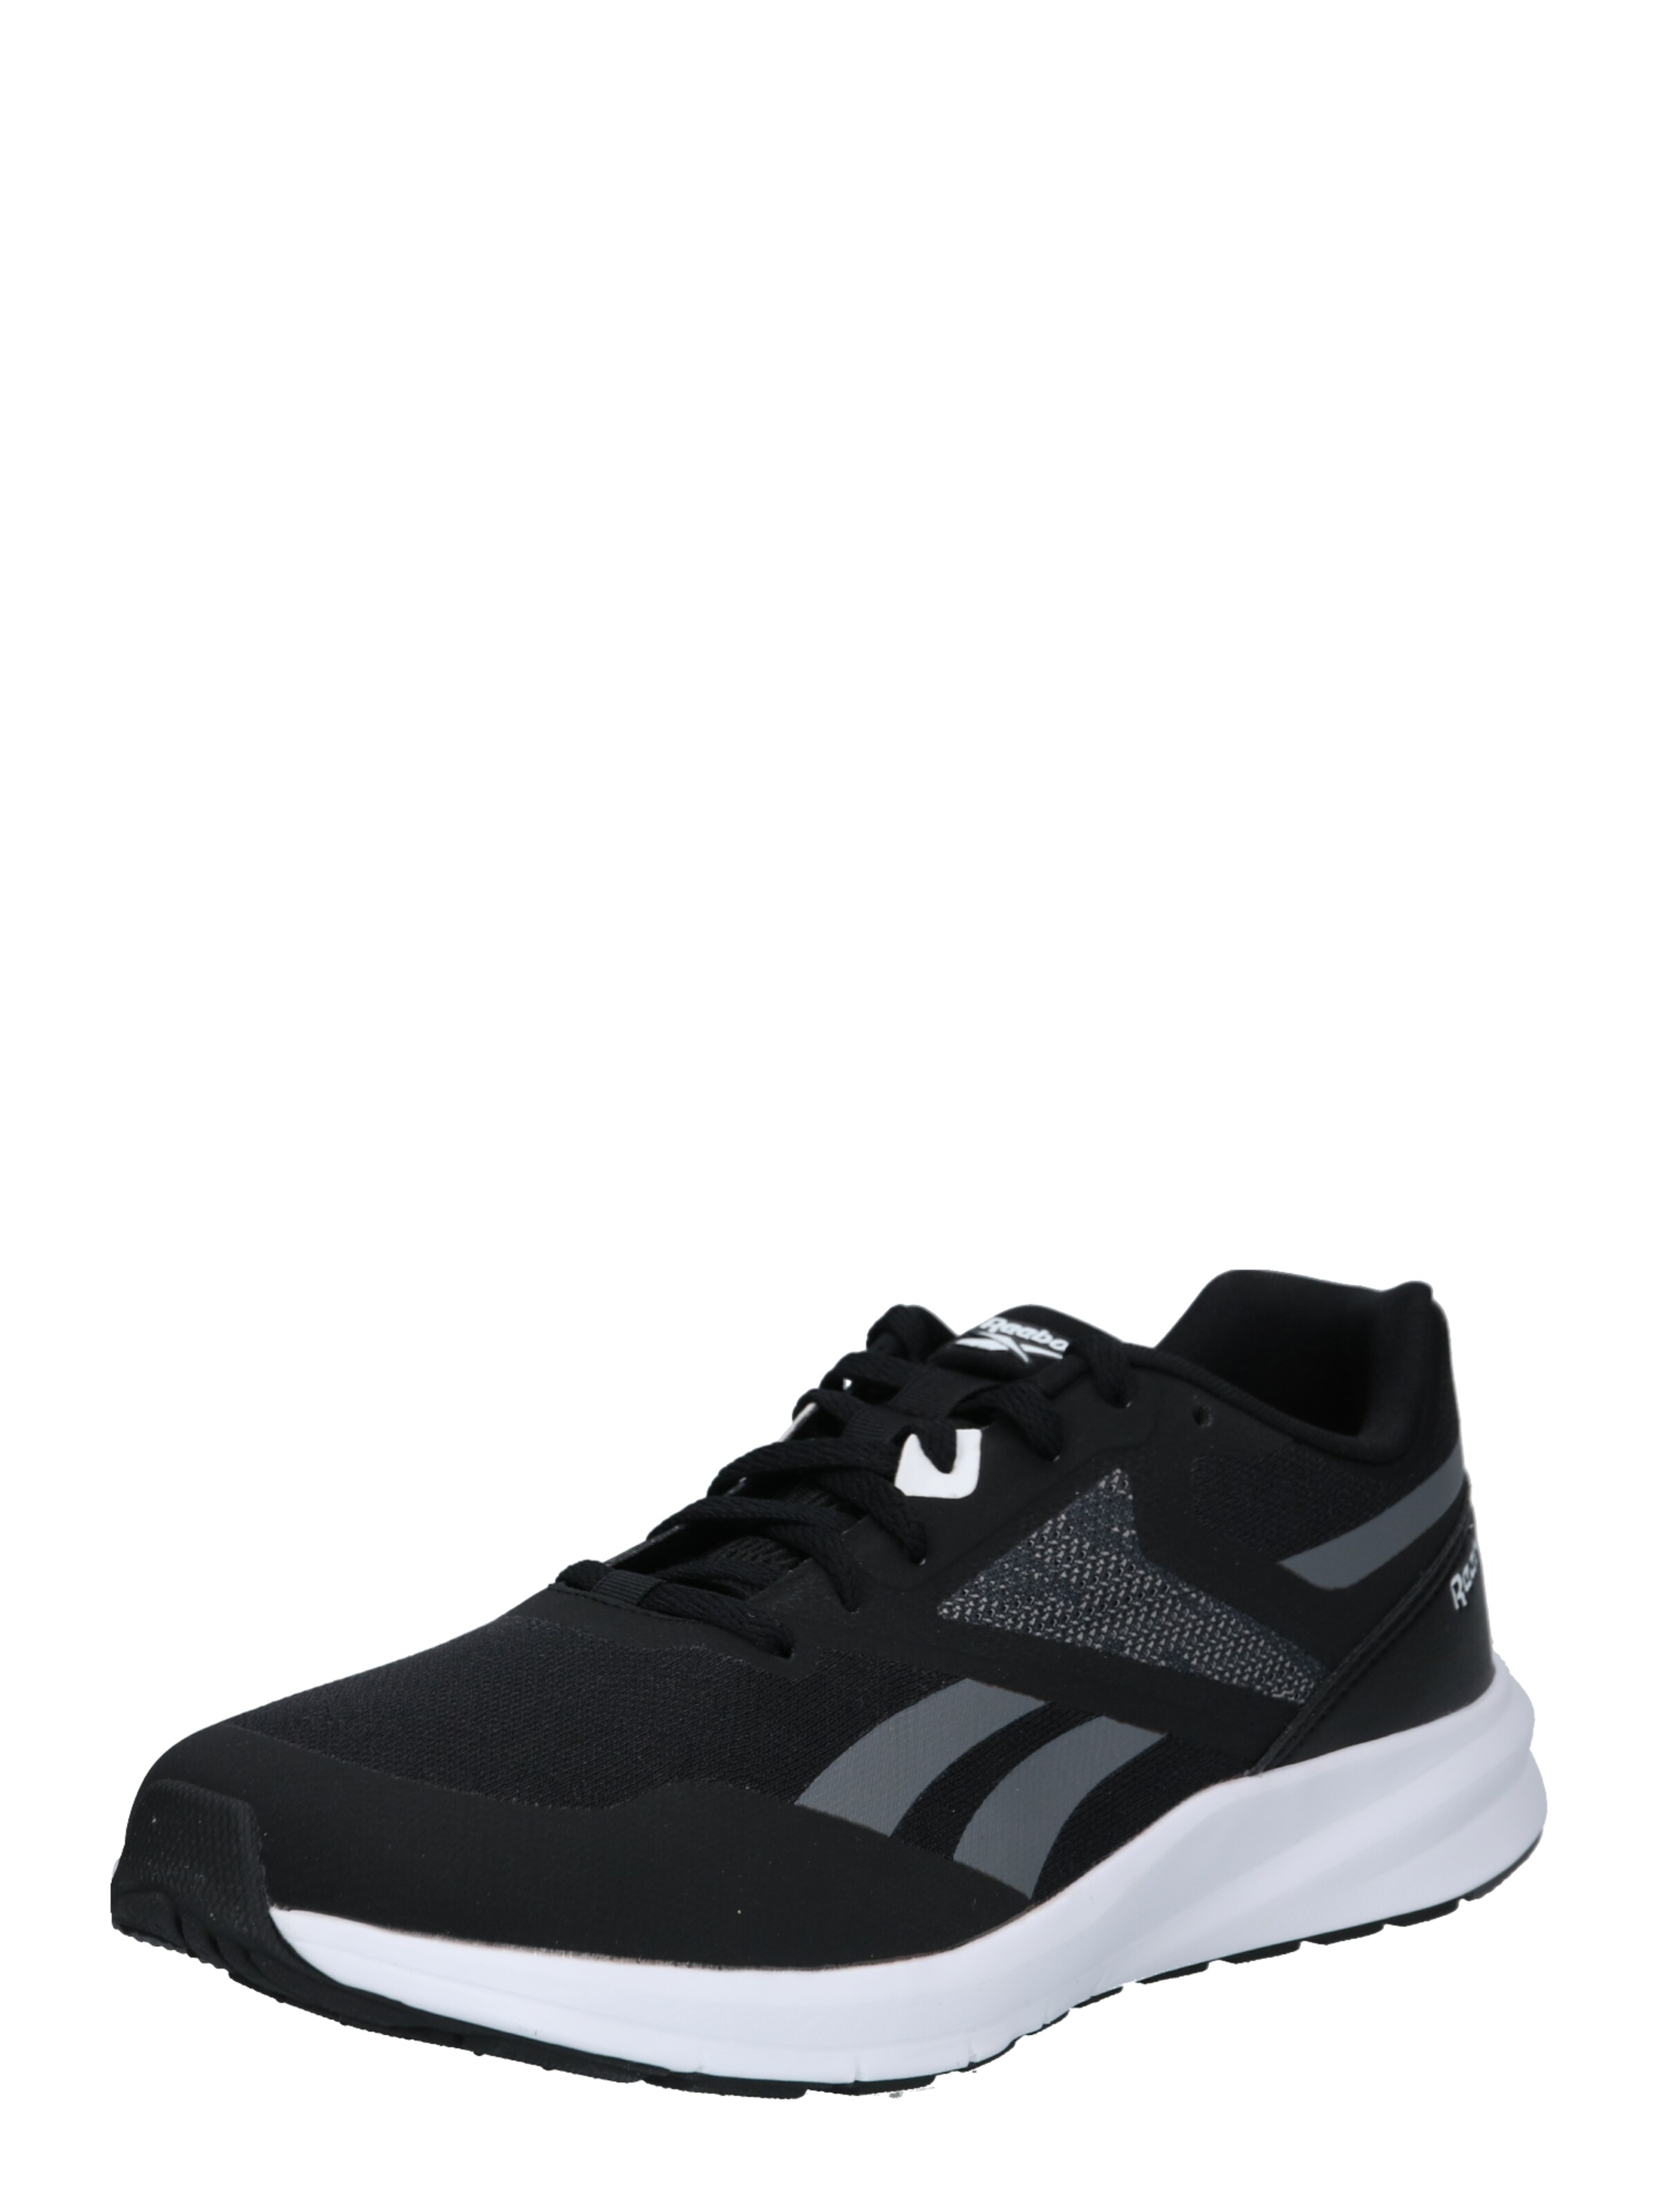 Men Sports | Reebok Sport Running Shoes 'Runner 4.0' in Black - IT55111